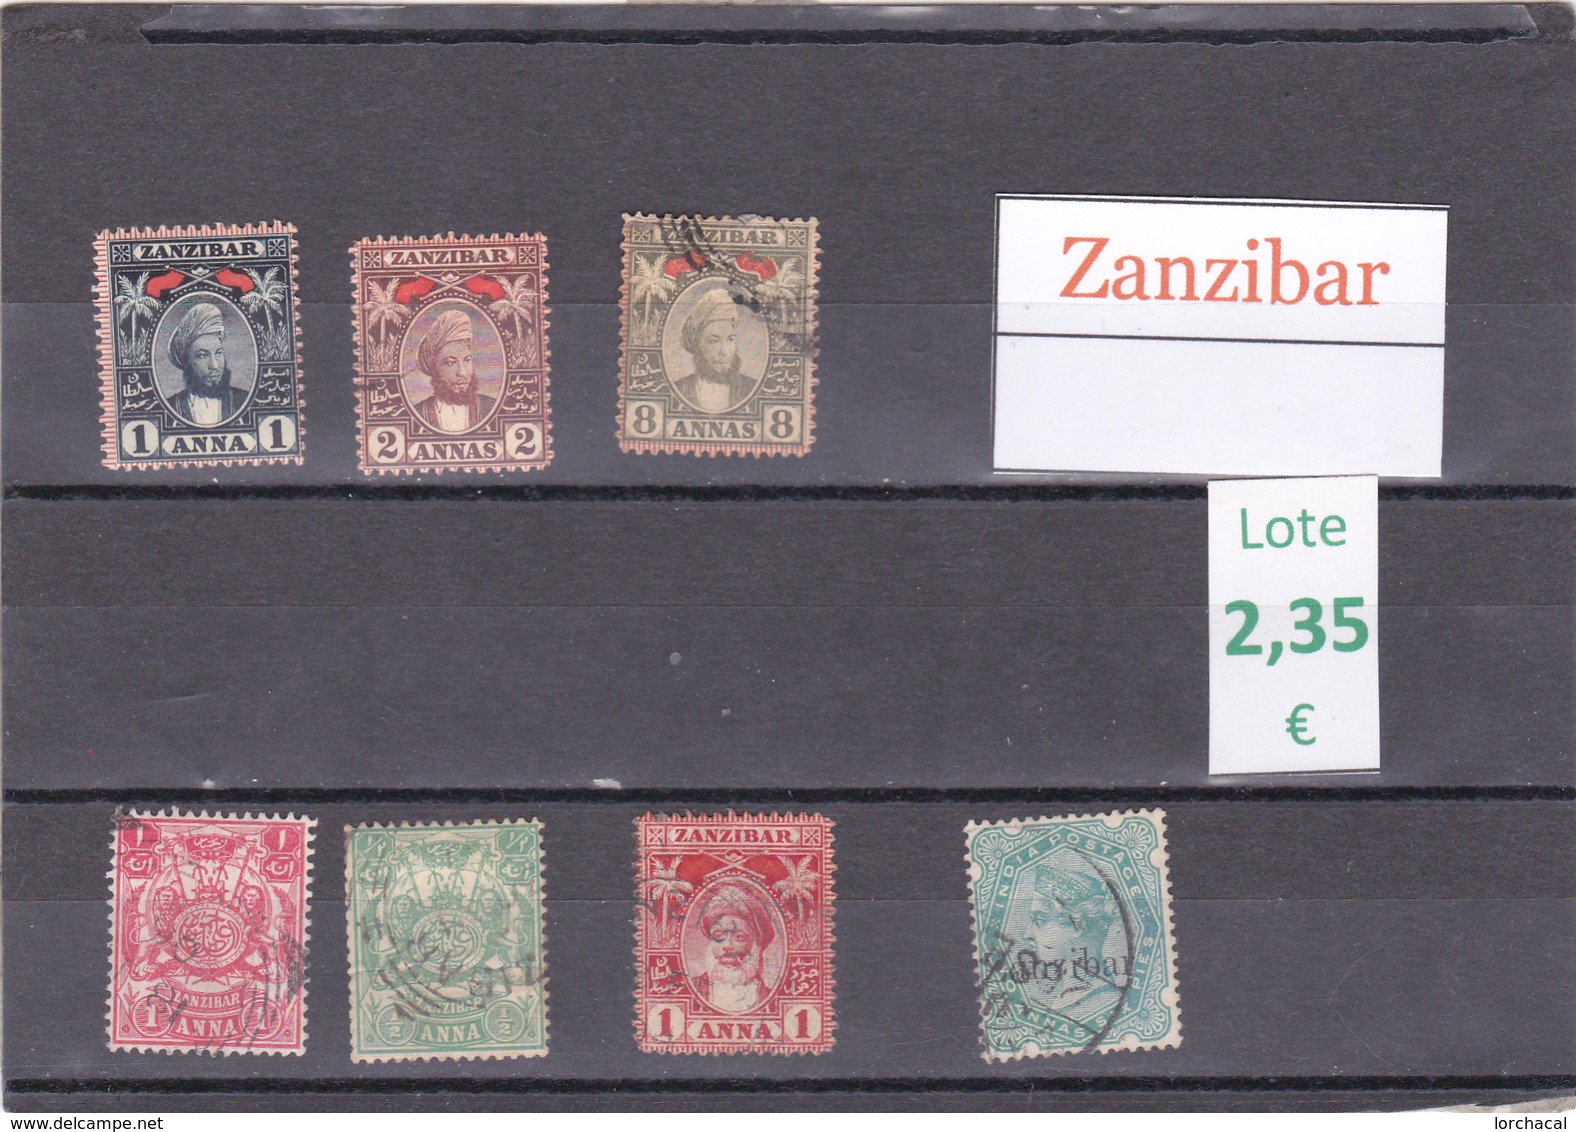 Tanzania    Zanzibar  -  Lote  7  Sellos Diferentes  - 6/3368 - Tanzania (1964-...)